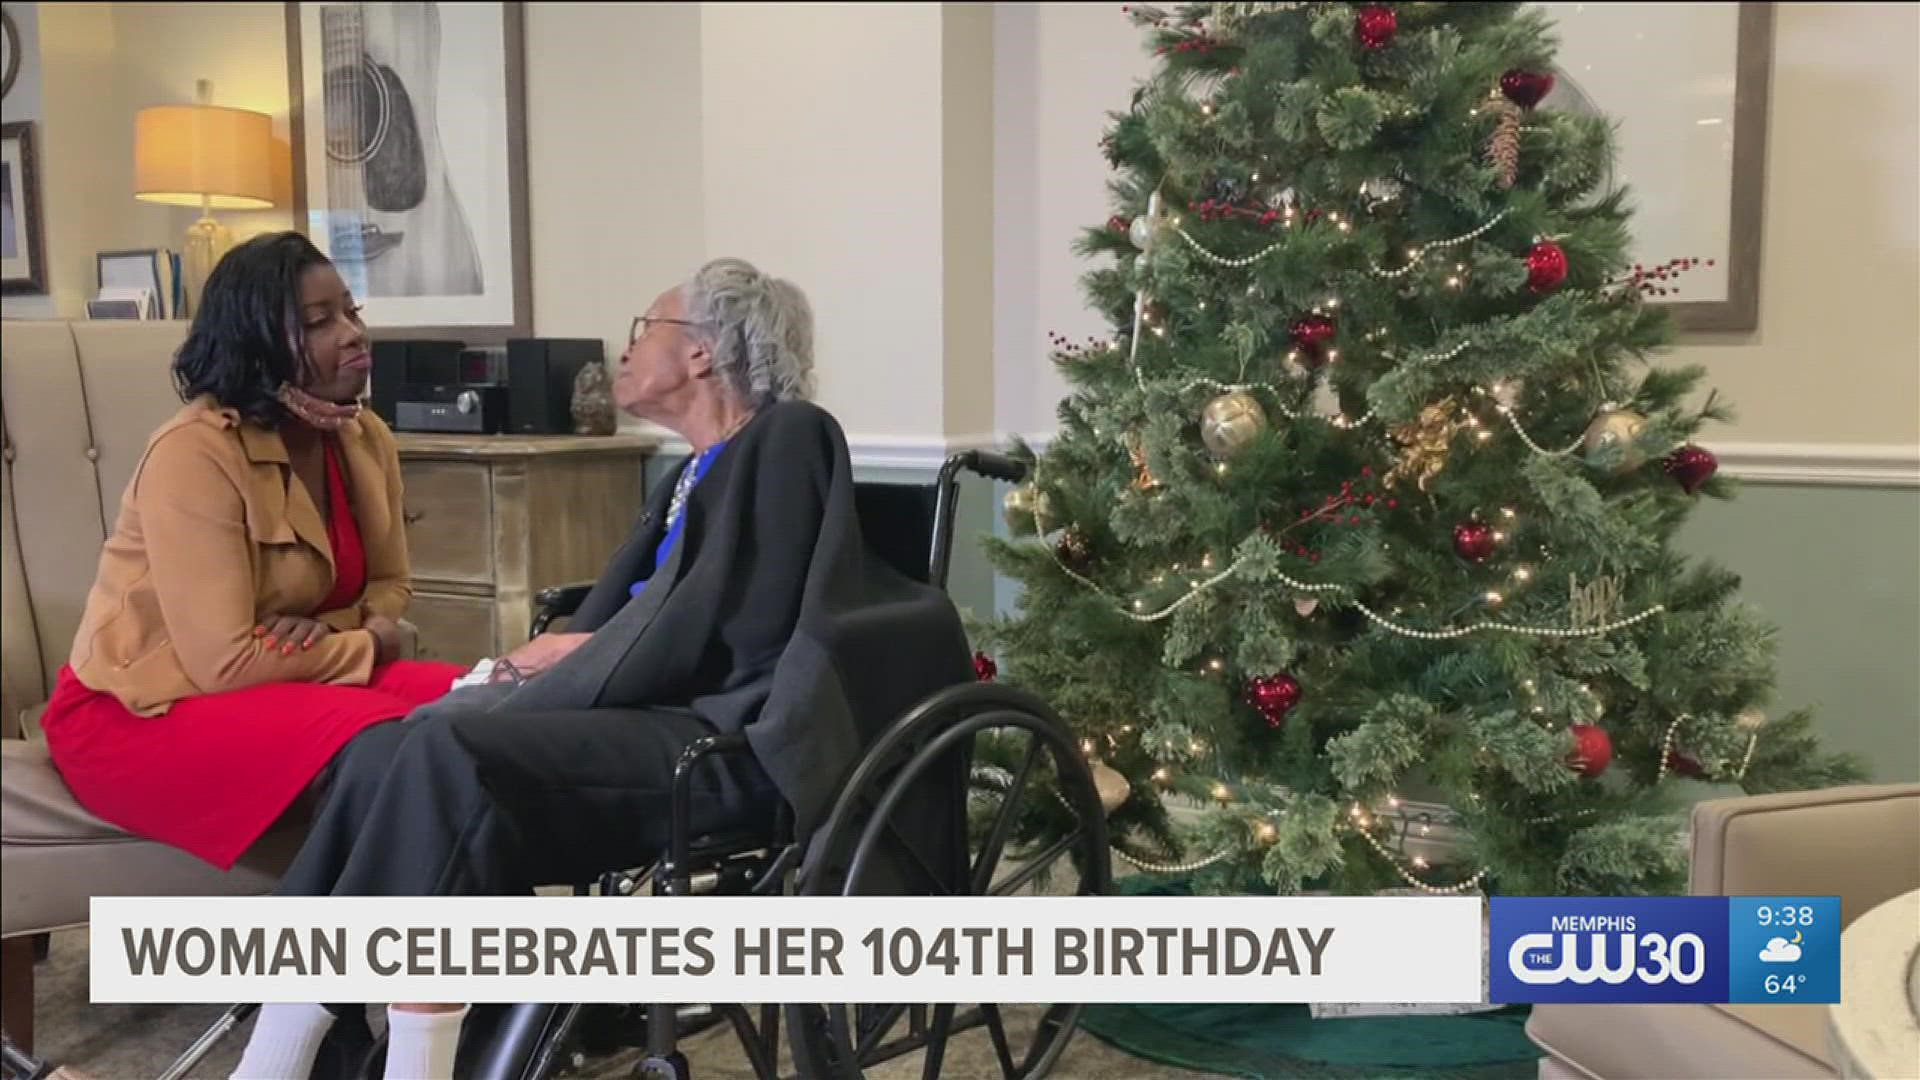 Ms. Ernestine Spencer celebrated her 104th birthday on Tuesday at Belmont Village Senior Living.